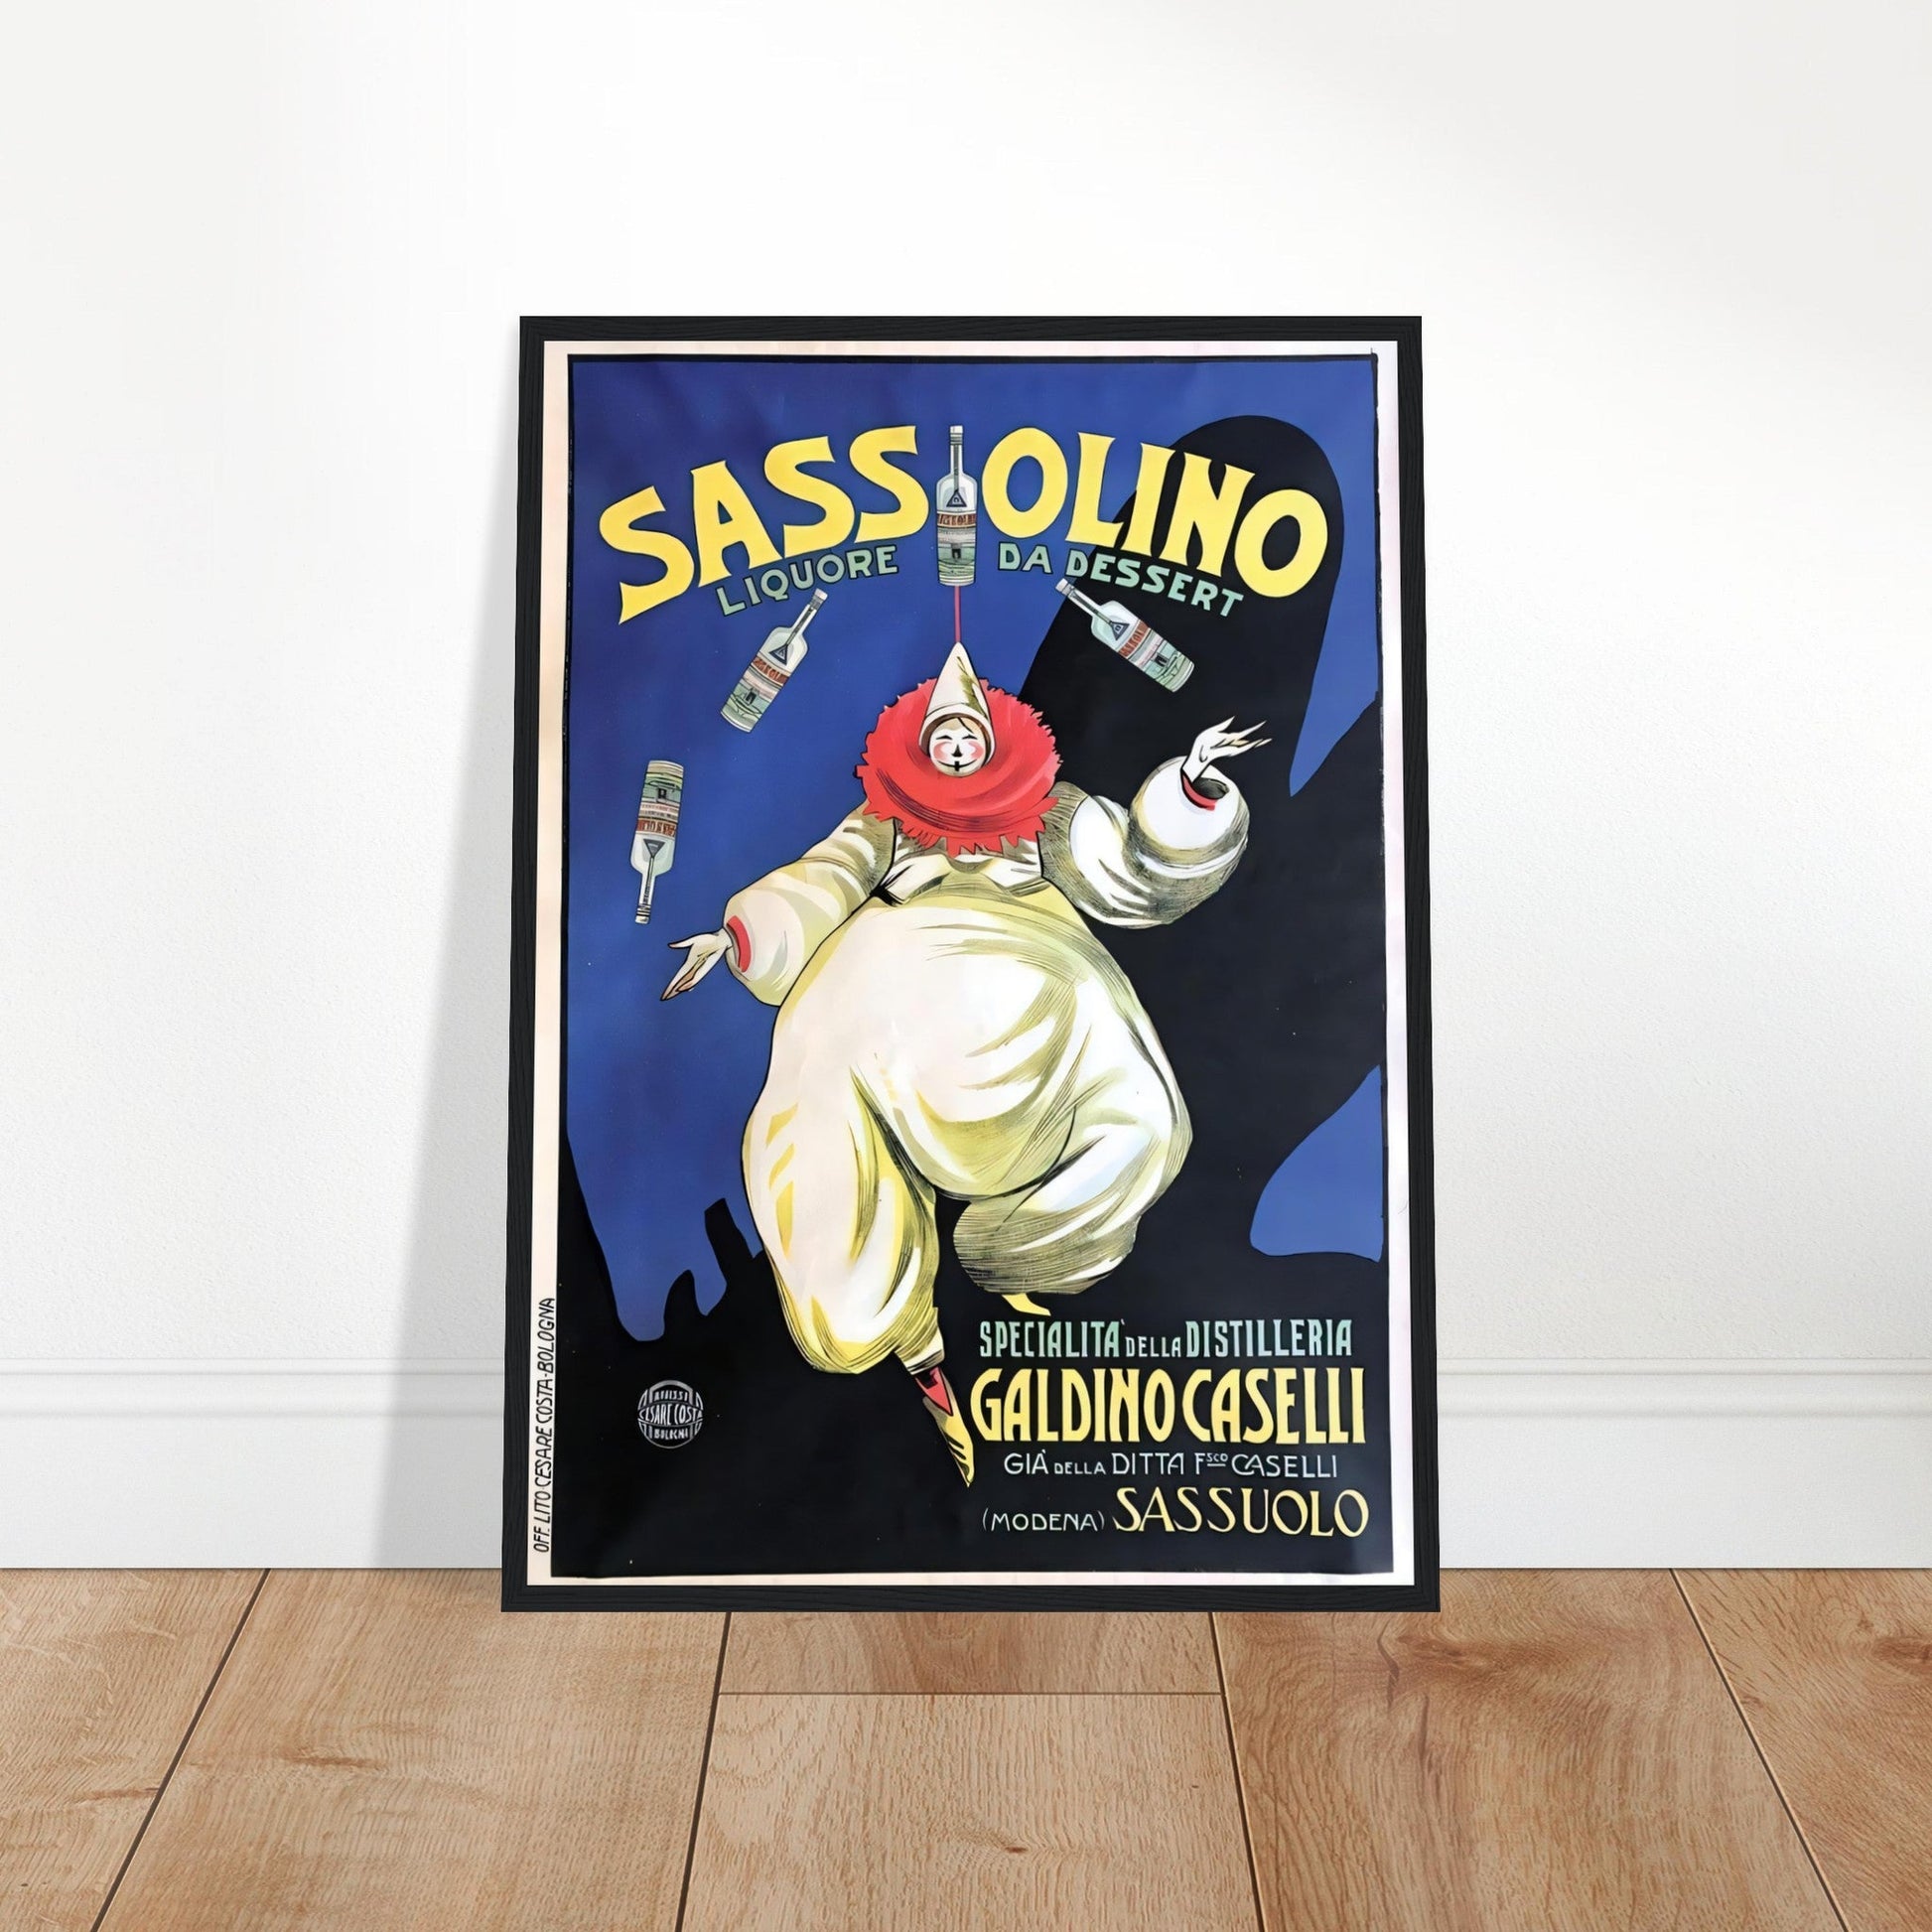 Sassolino Vintage Poster Reprint on Premium matte Paper - Posterify